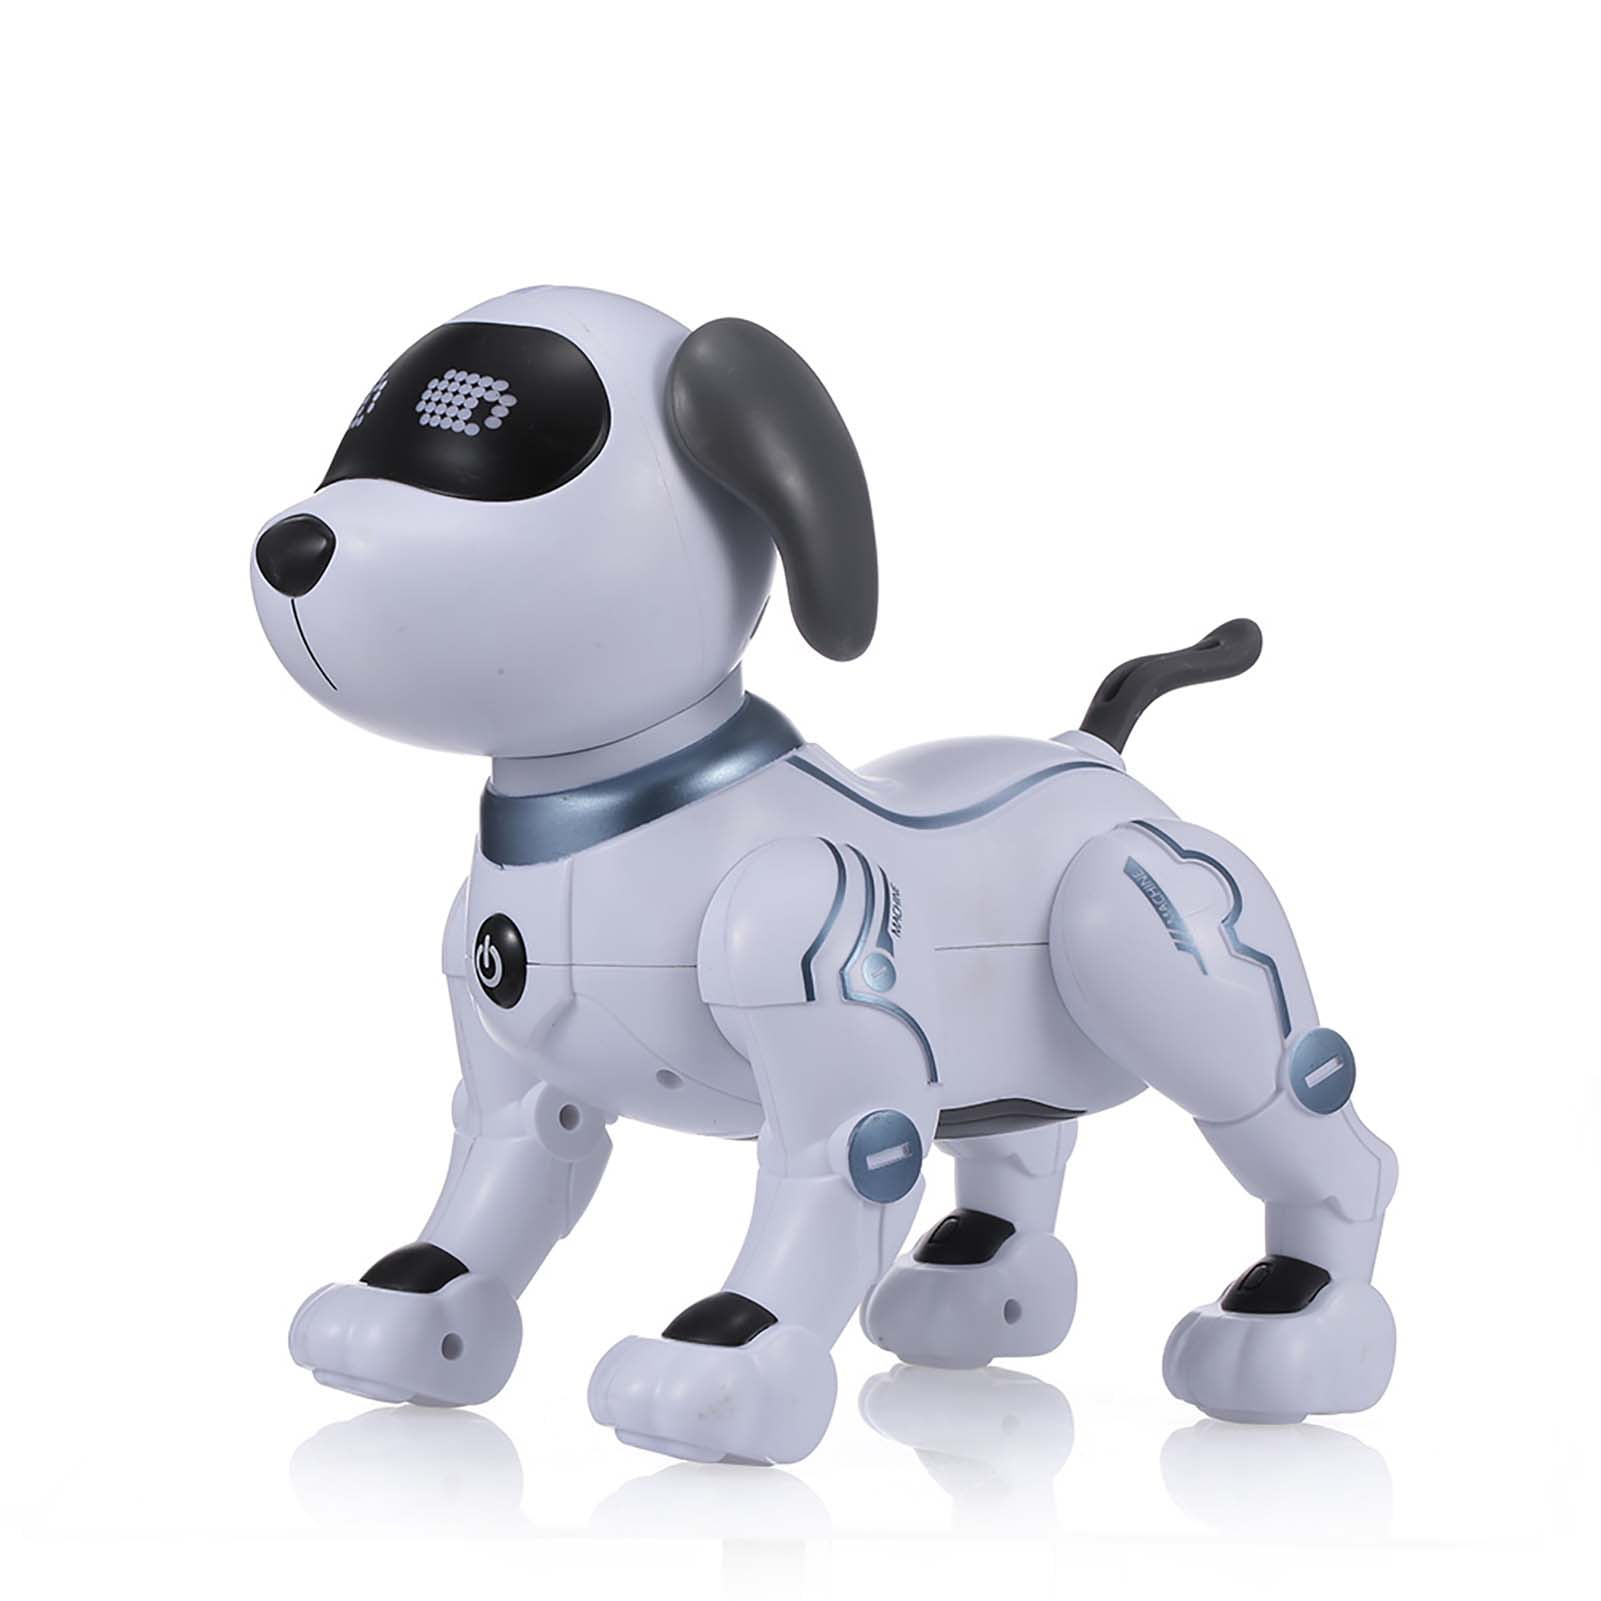 LE NENG TOYS K16A Electronic RC Robot Dog Voice Remote Control Animal Pets Toys 